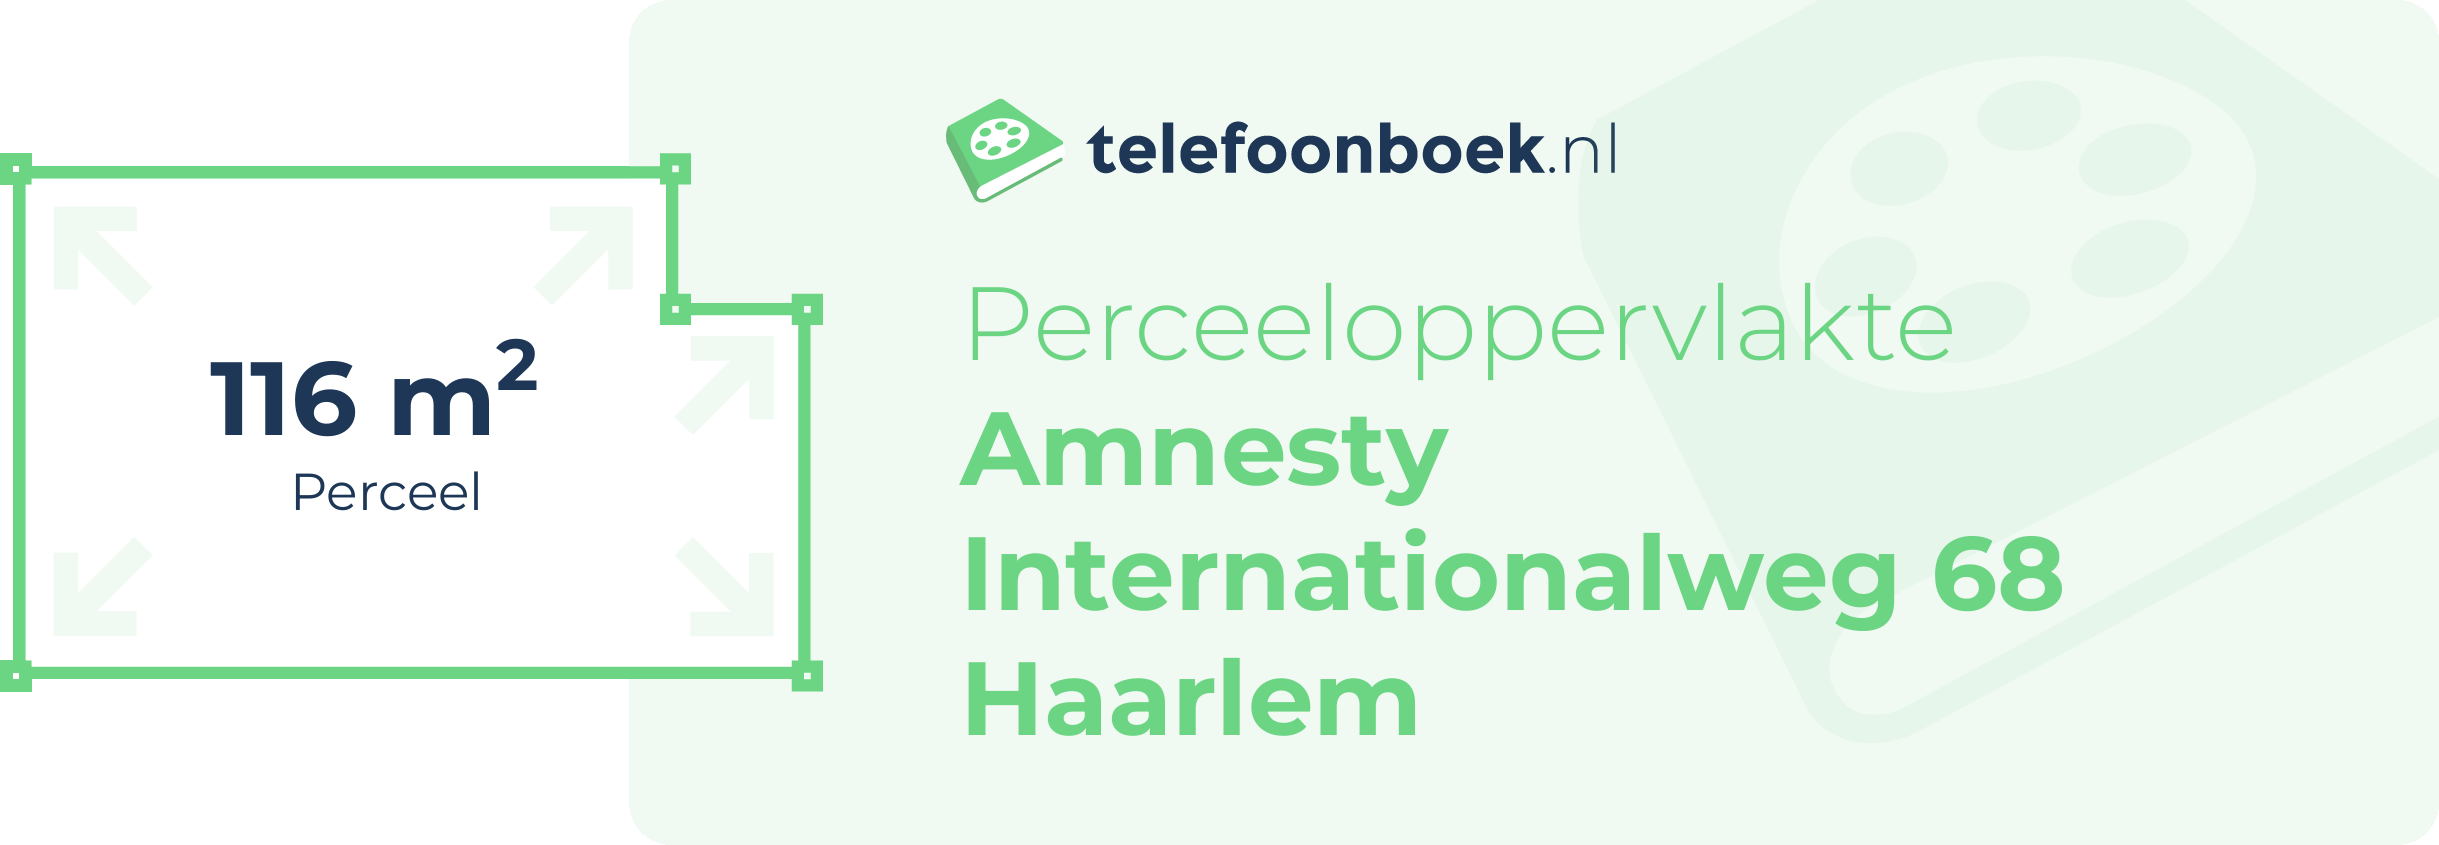 Perceeloppervlakte Amnesty Internationalweg 68 Haarlem